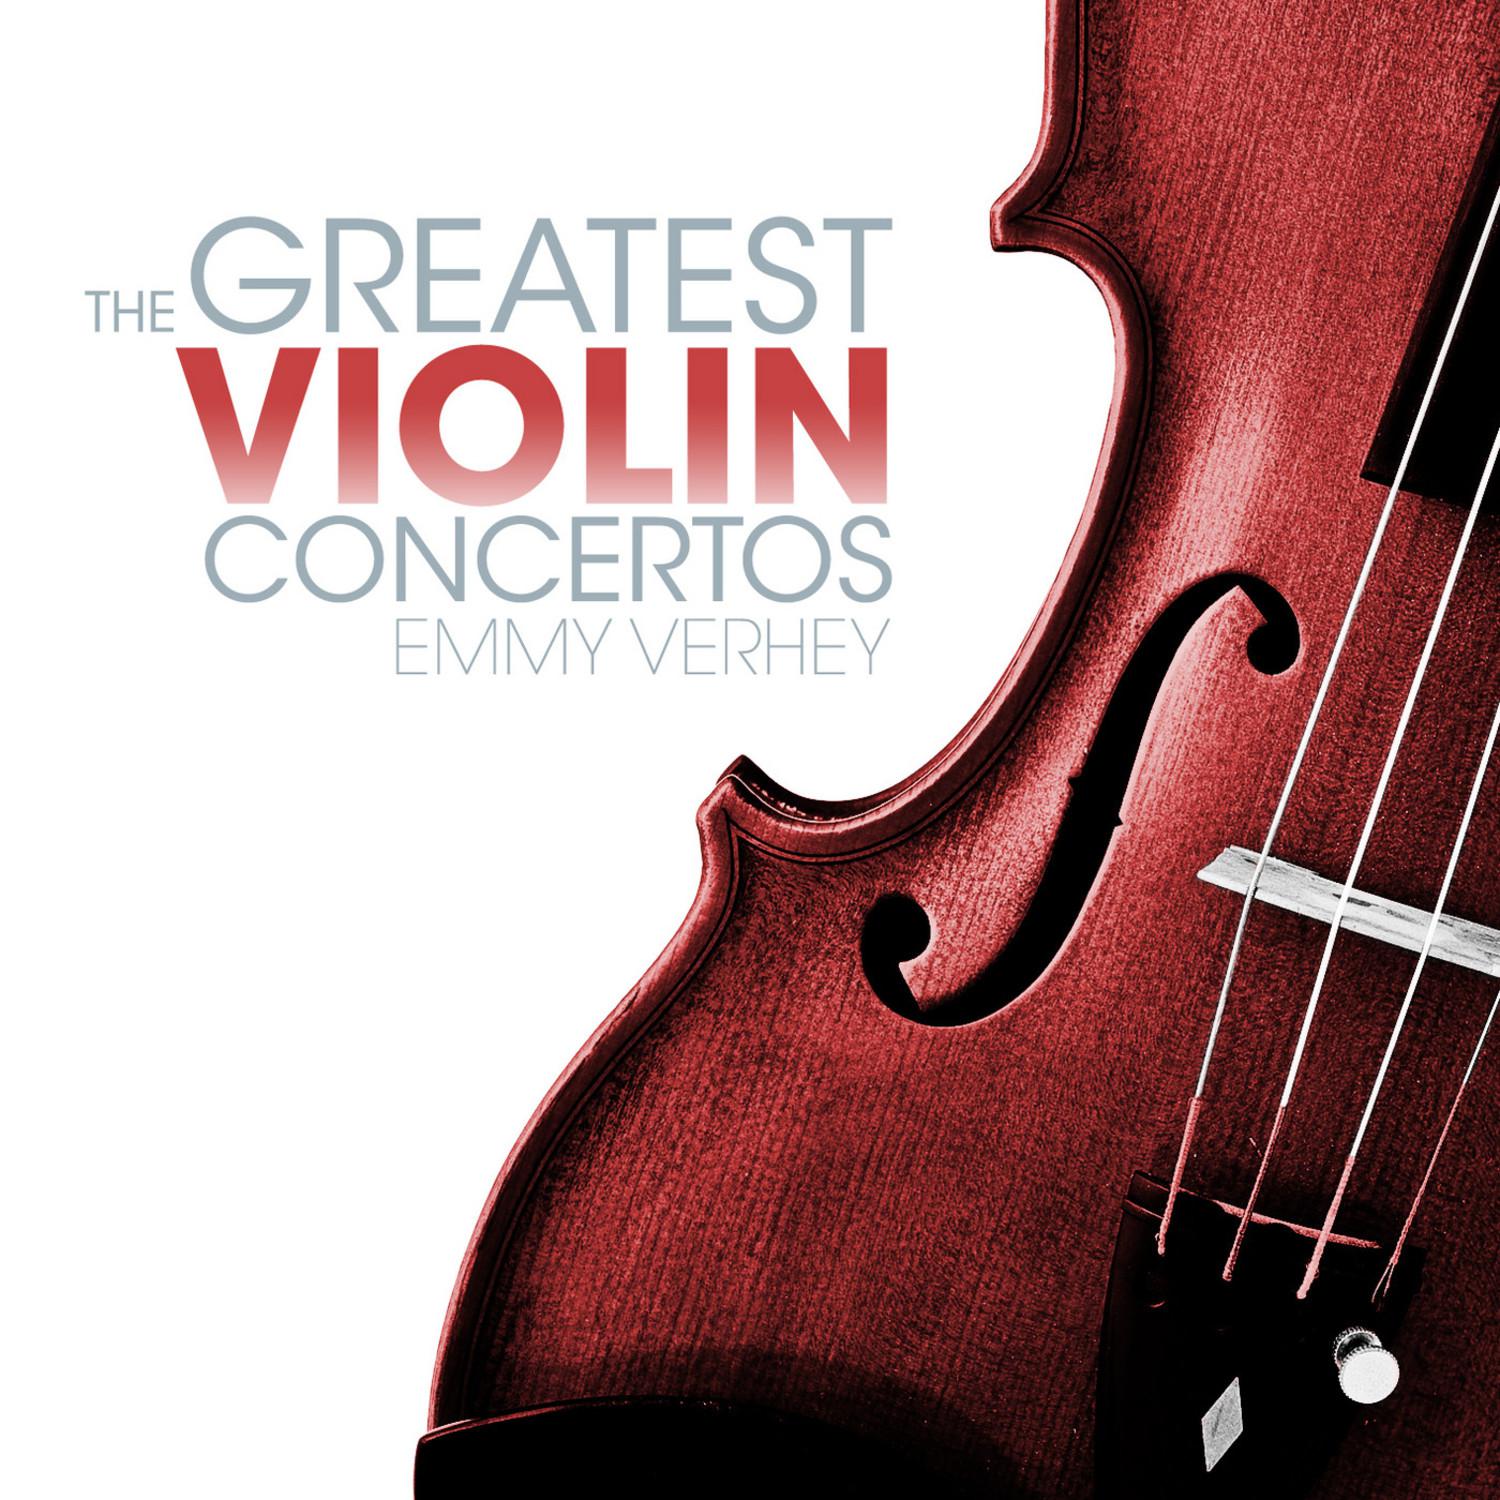 Concerto No. 1 in B-Flat Major for Violin and Orchestra, K. 207: II. Adagio